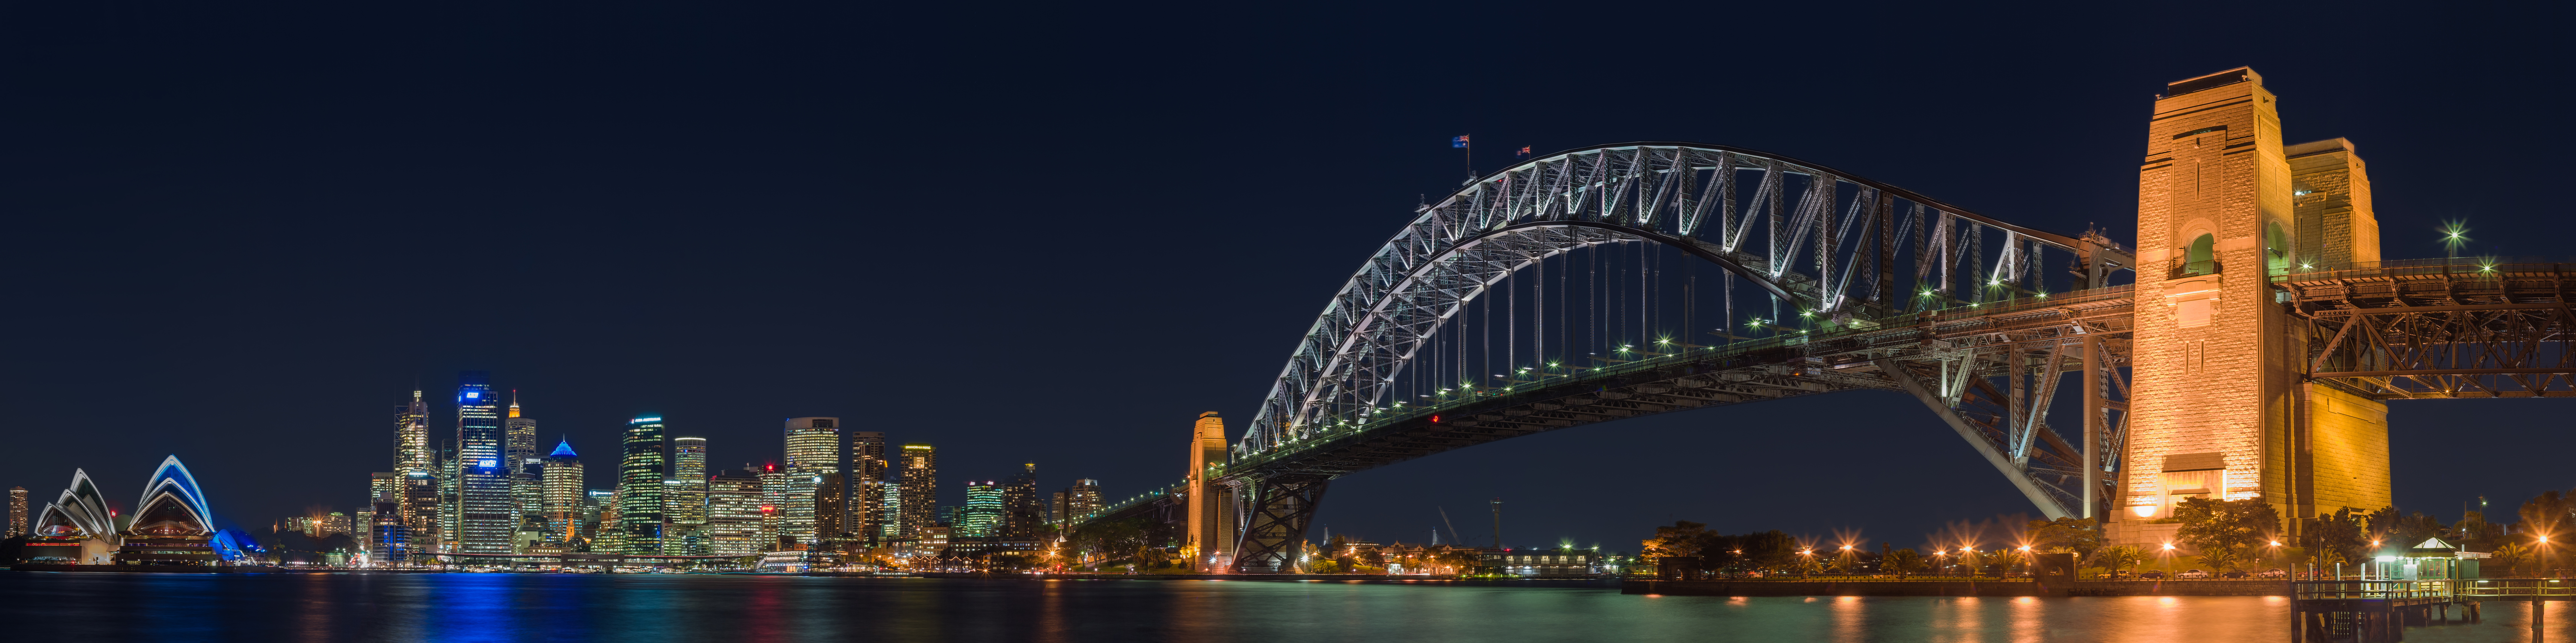 Sydney Harbour Bridge - Wikipedia